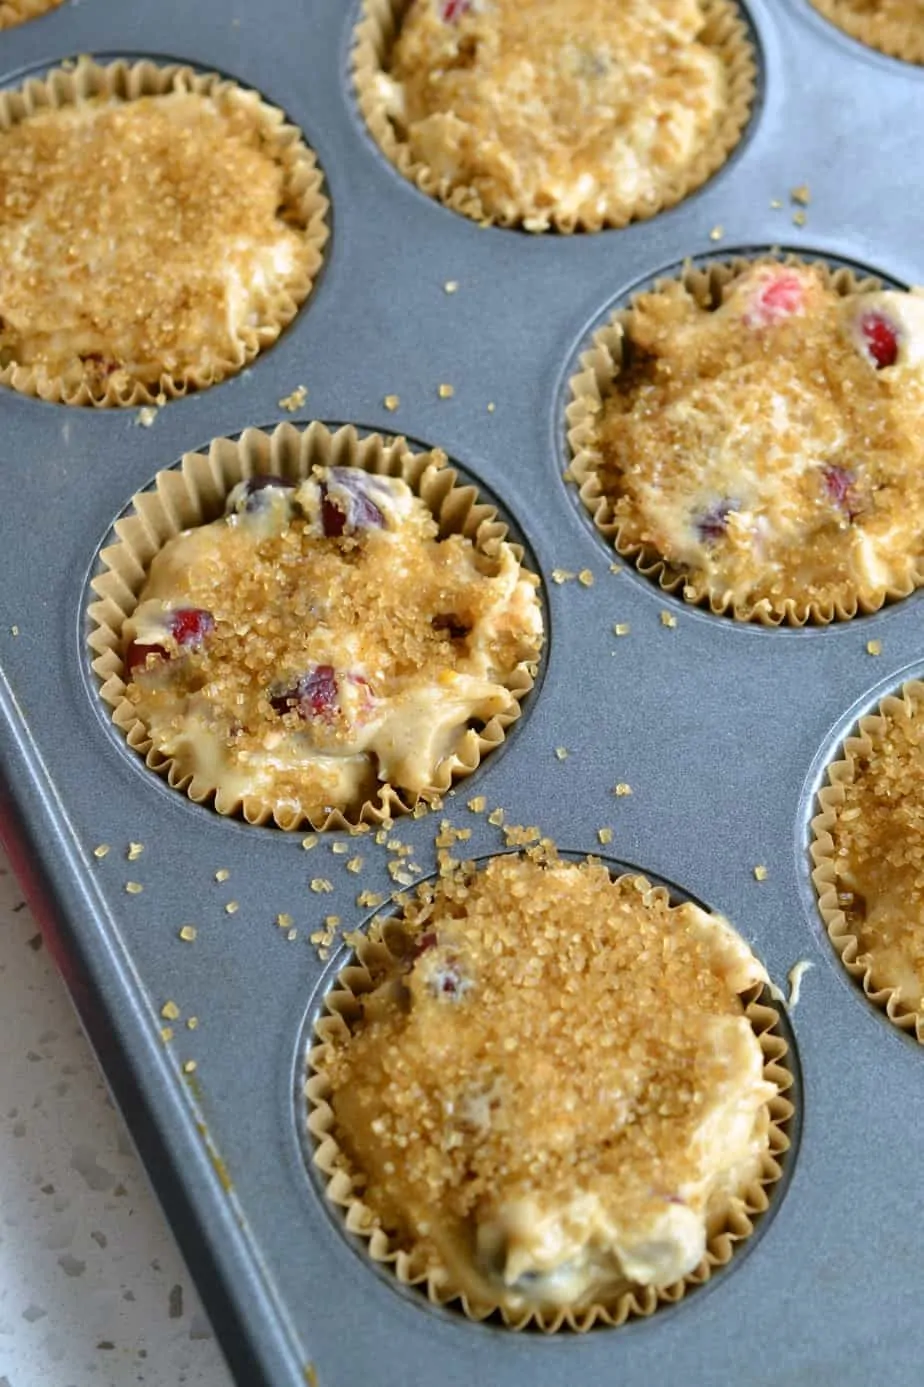 How to Make Cranberry Orange Muffins